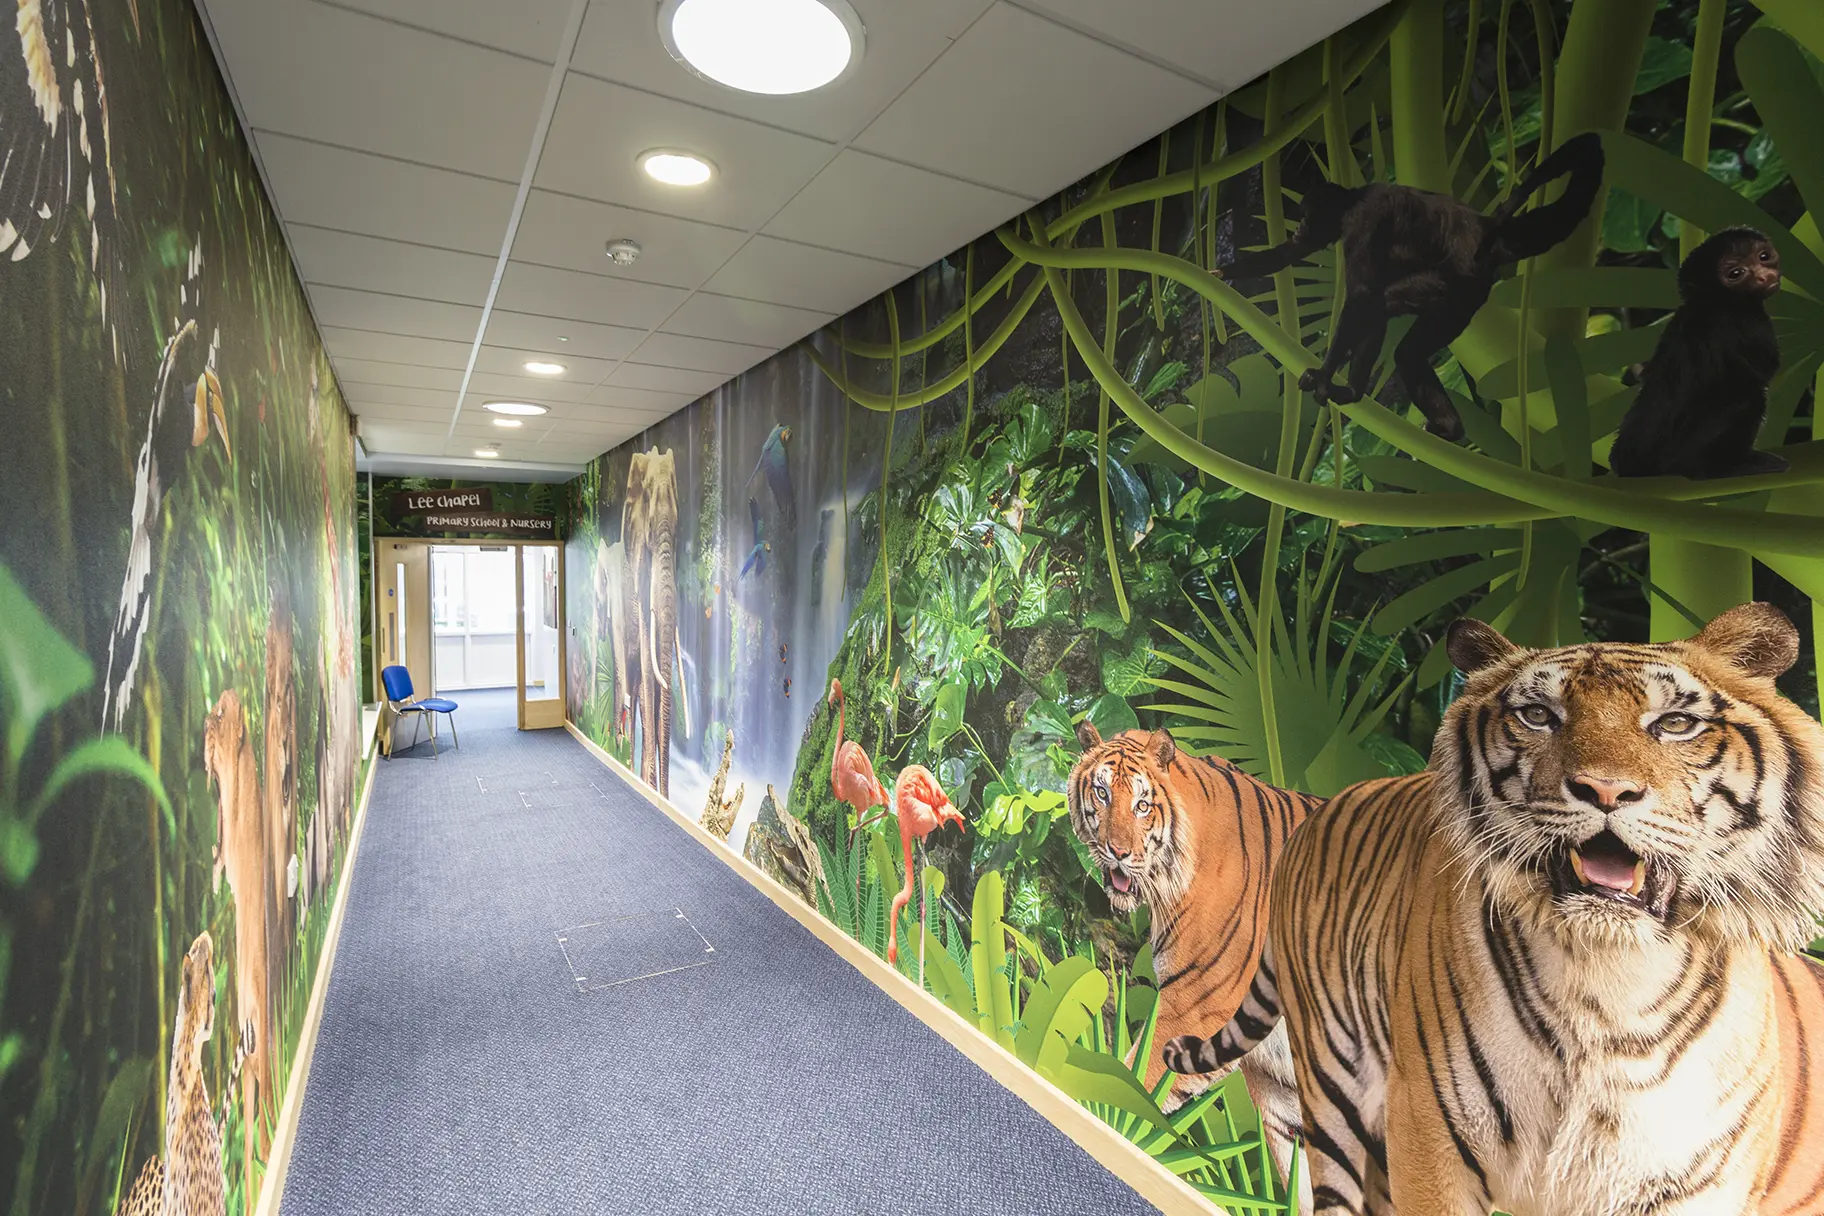 Lee Chapel School immersive jungle themed wall art